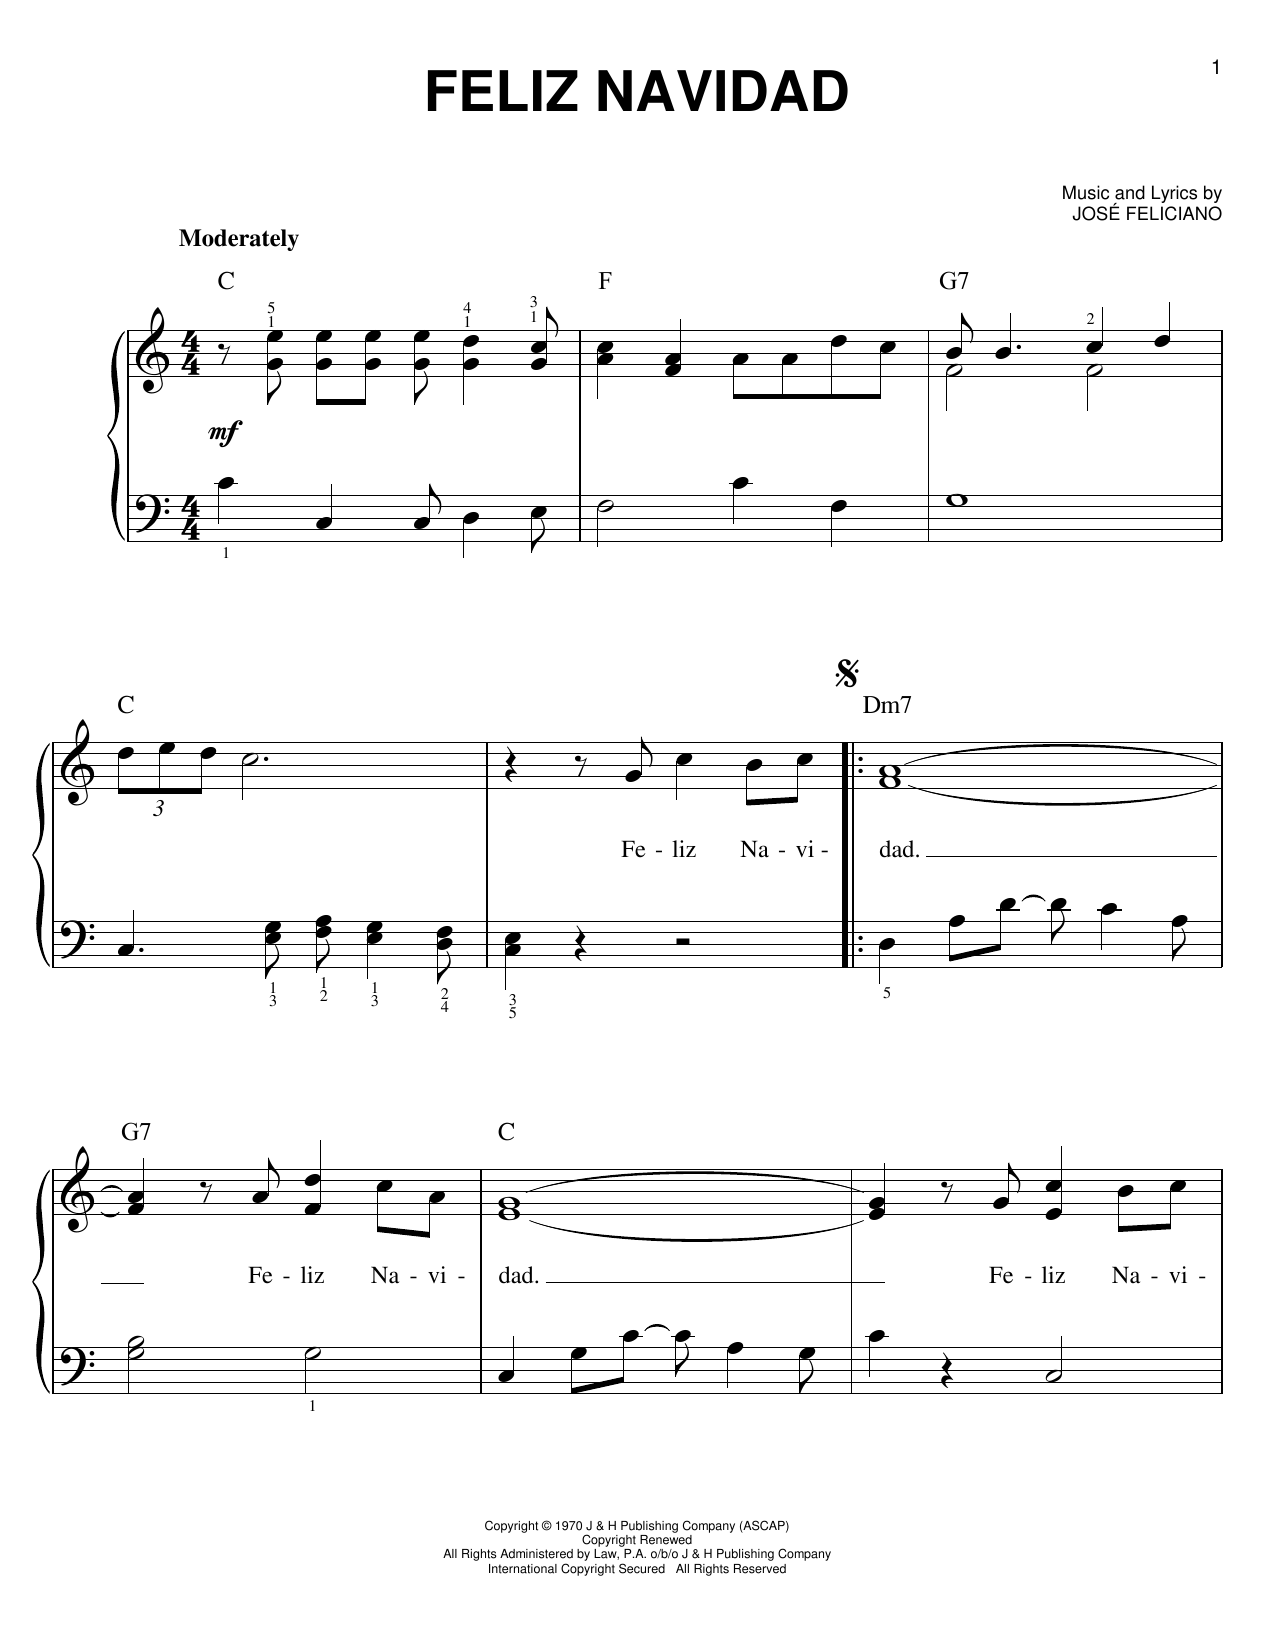 Michael Bublé Feliz Navidad Sheet Music Notes & Chords for Voice - Download or Print PDF